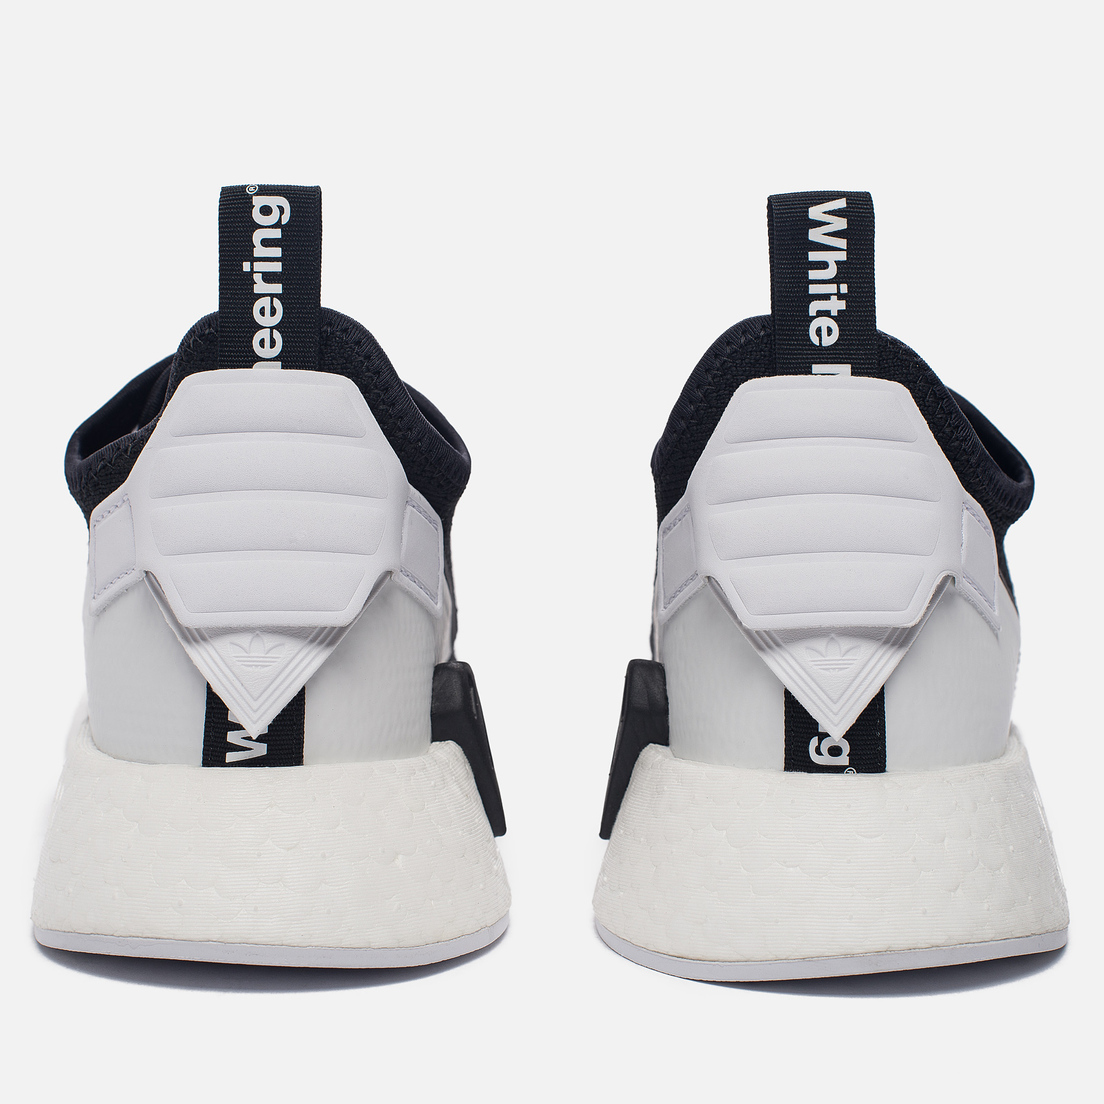 adidas Originals Мужские кроссовки x White Mountaineering NMD R2 Primeknit